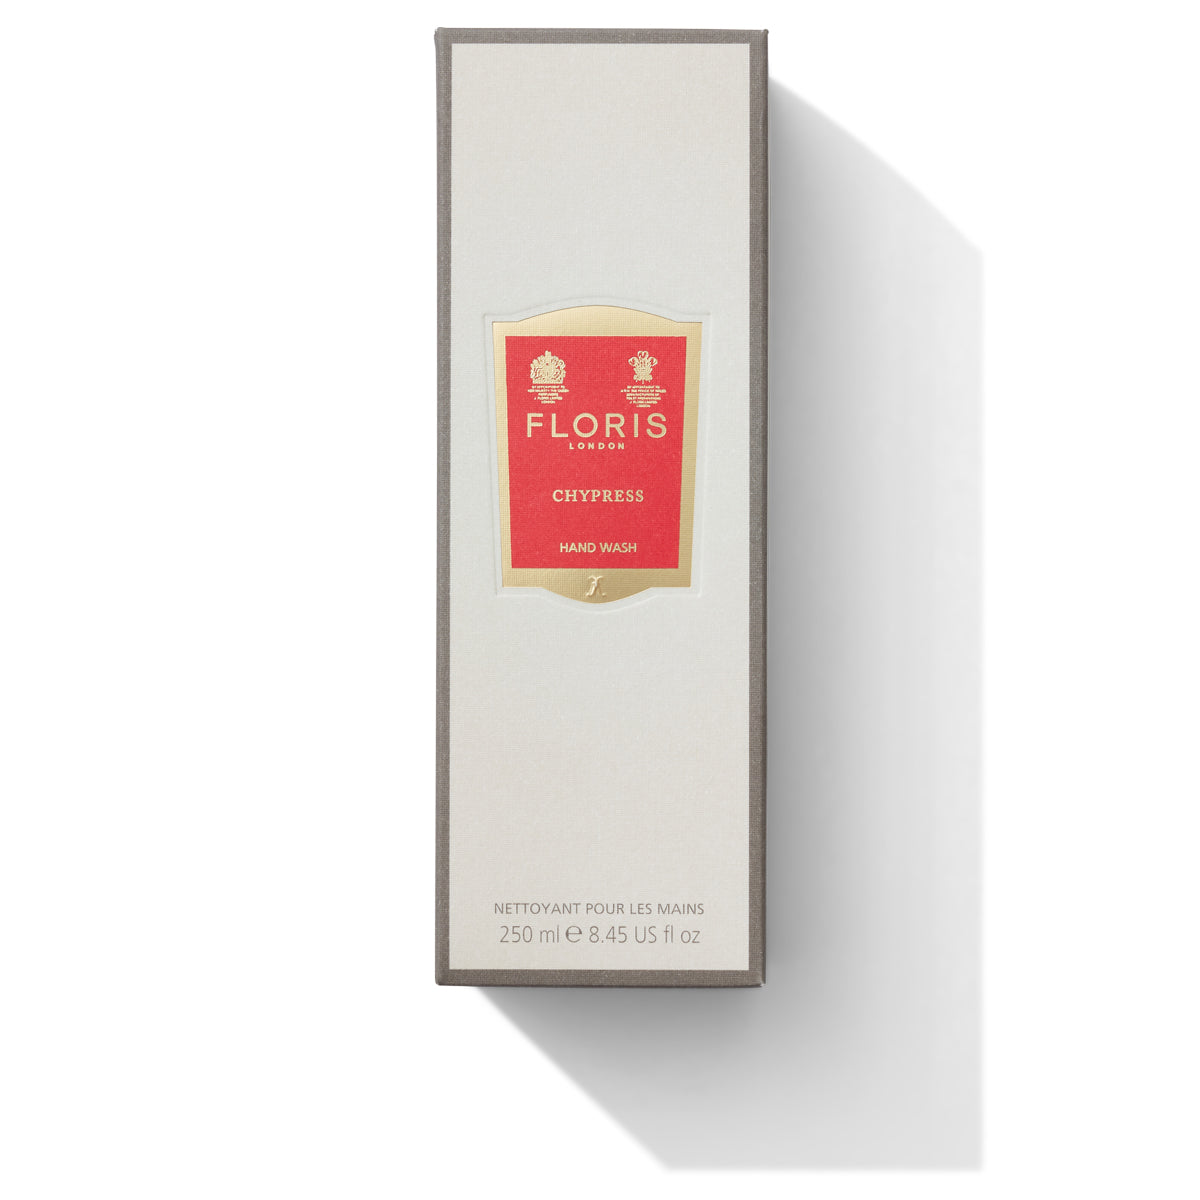 Floris London Chypress - Luxury Hand Wash 250ml Packaging